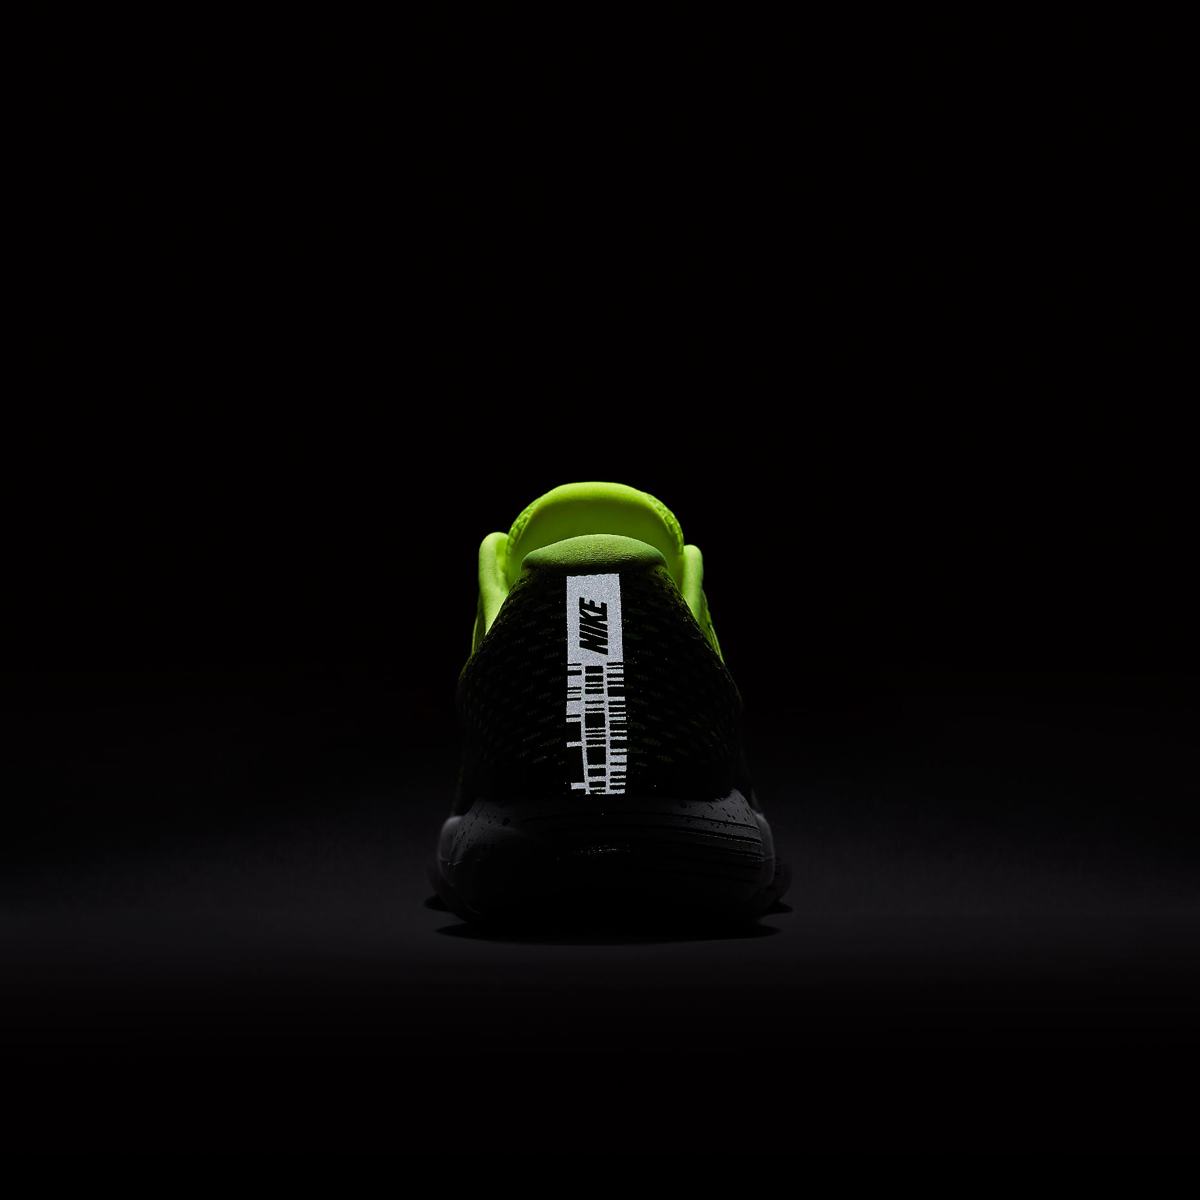 Кроссовки для бега Nike NIKE LUNARGLIDE 8 SHIELD